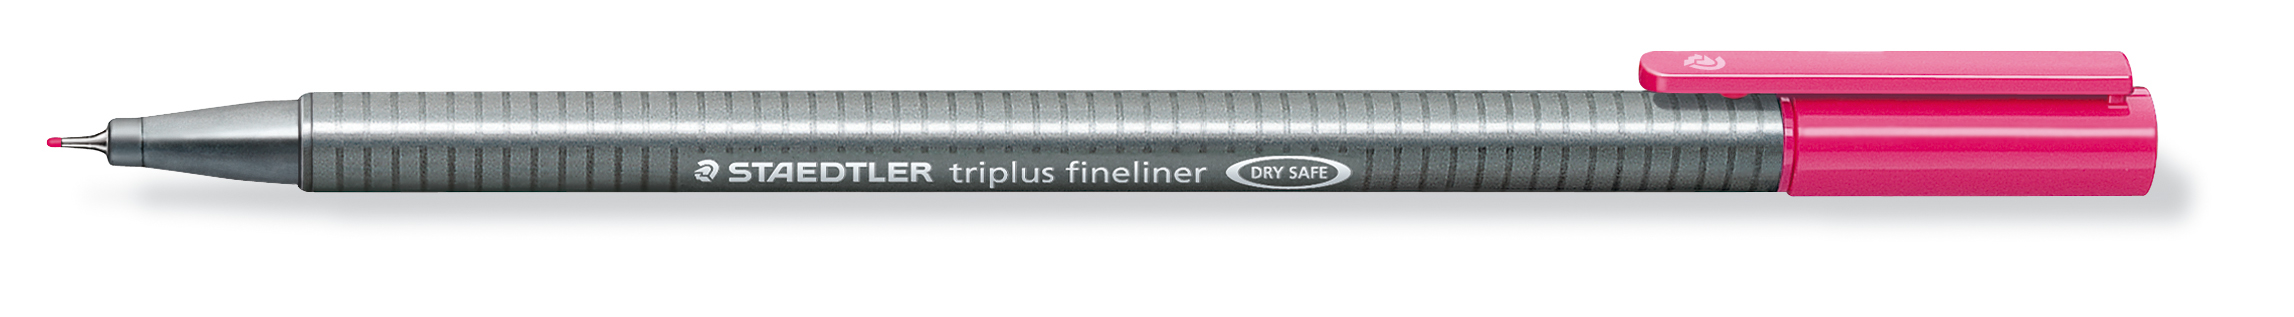 STAEDTLER Triplus Fineliner 0,3mm 334-20 magenta